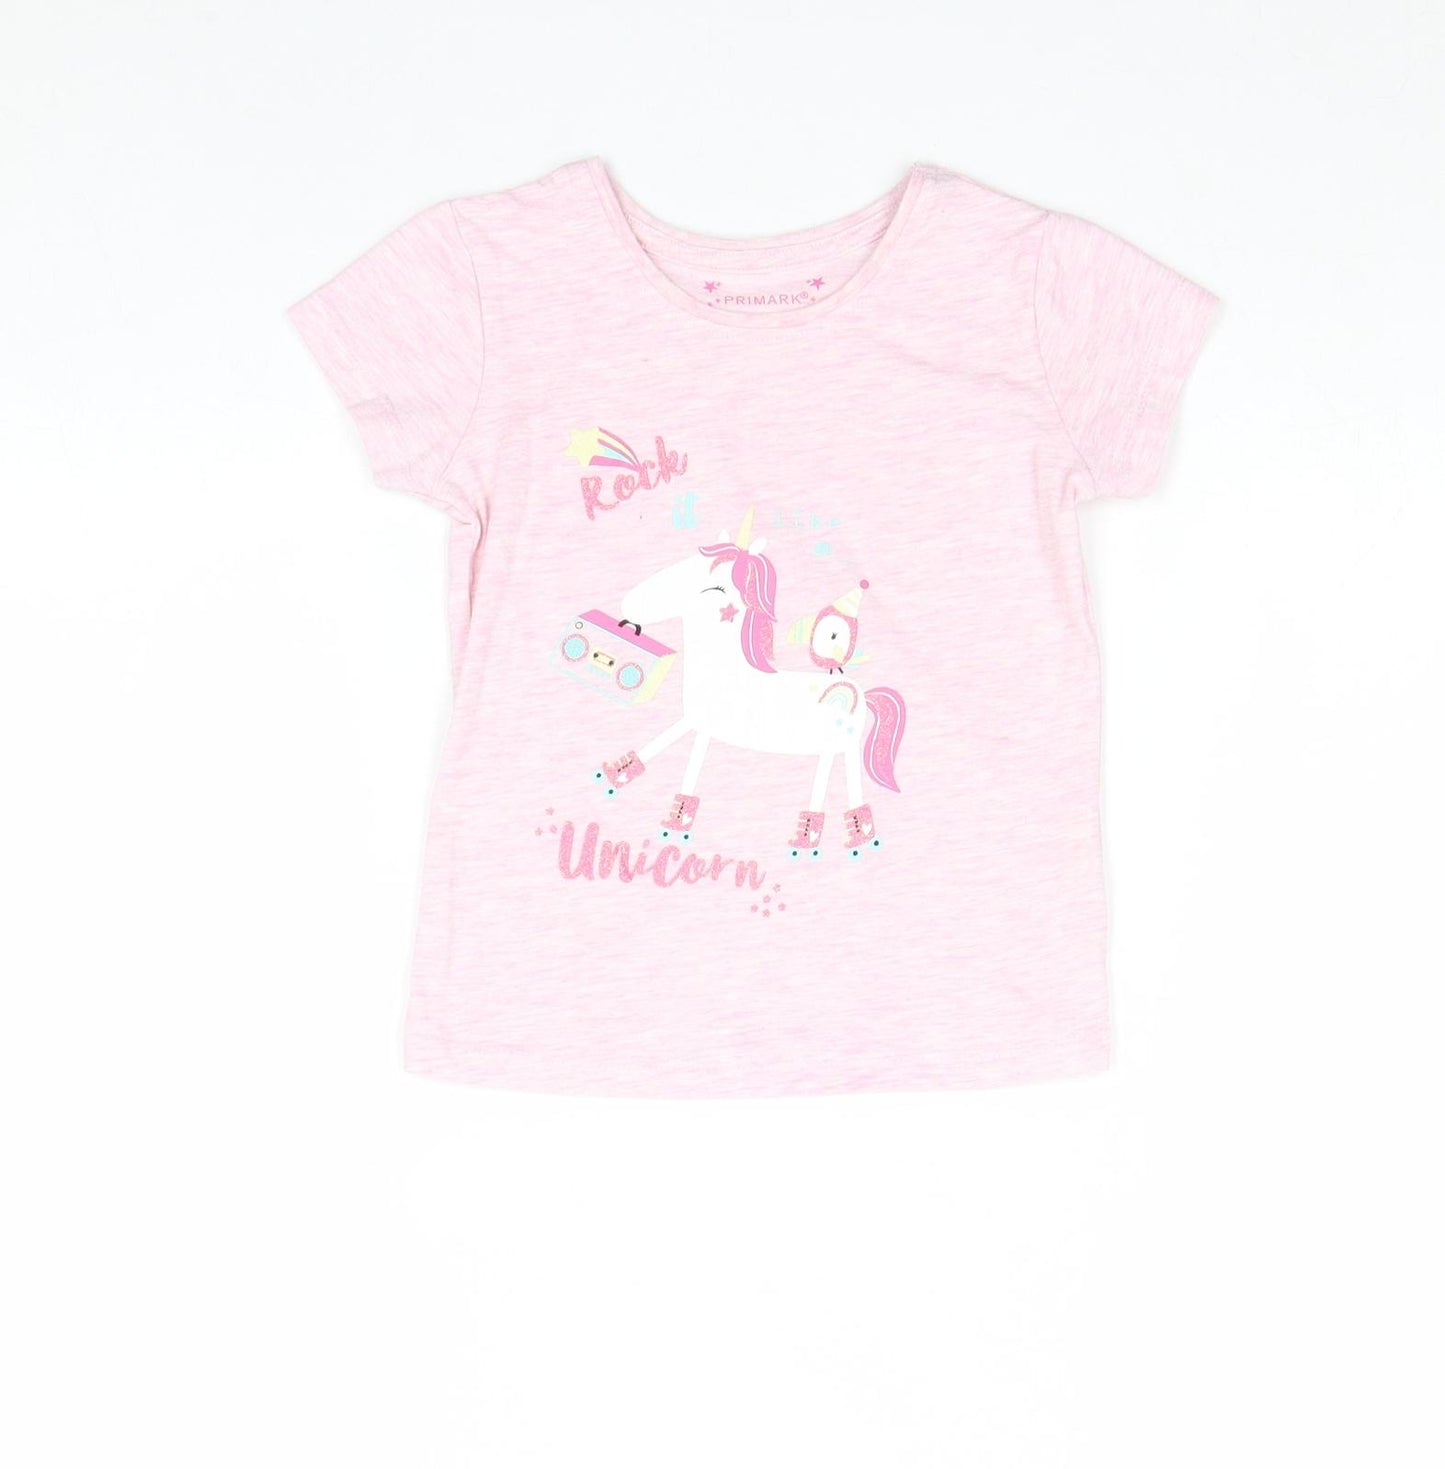 Primark Girls Pink Cotton Basic T-Shirt Size 4-5 Years Round Neck Pullover - Unicorn